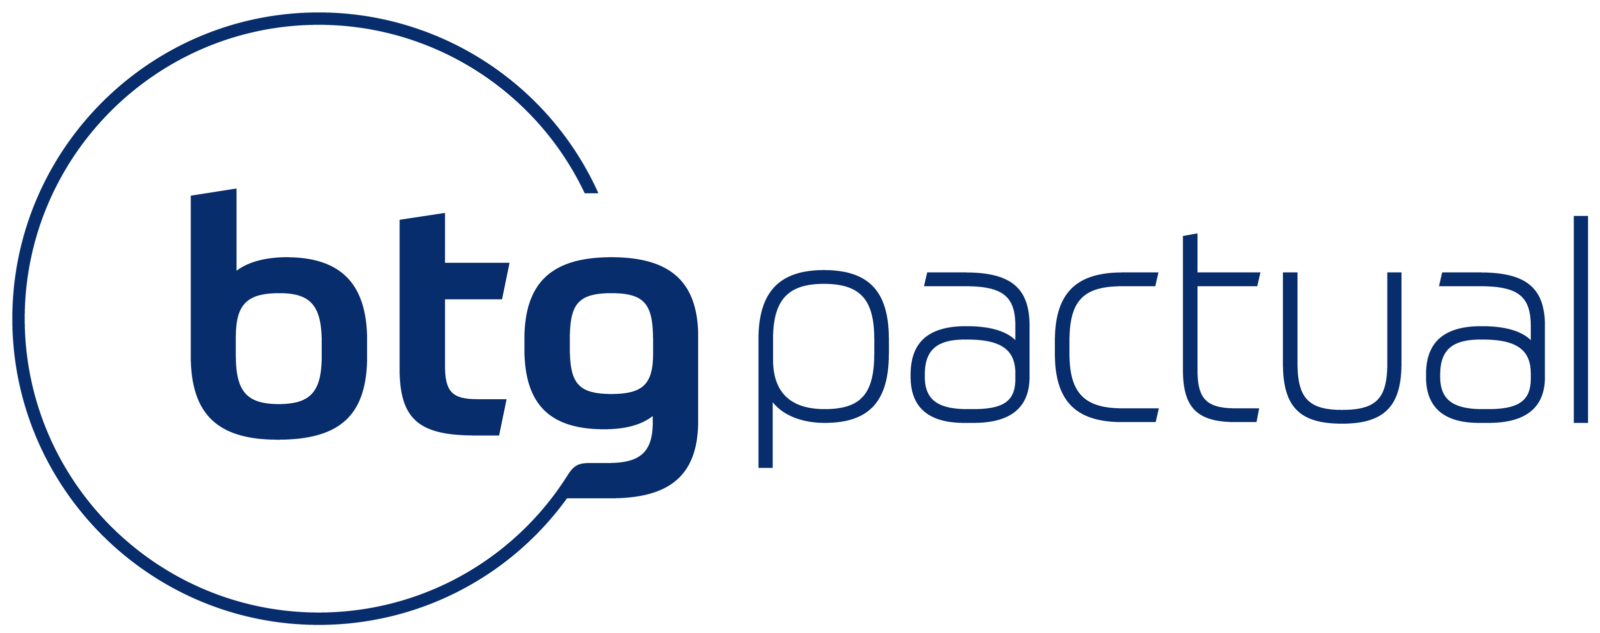 Logo Btg Pactual